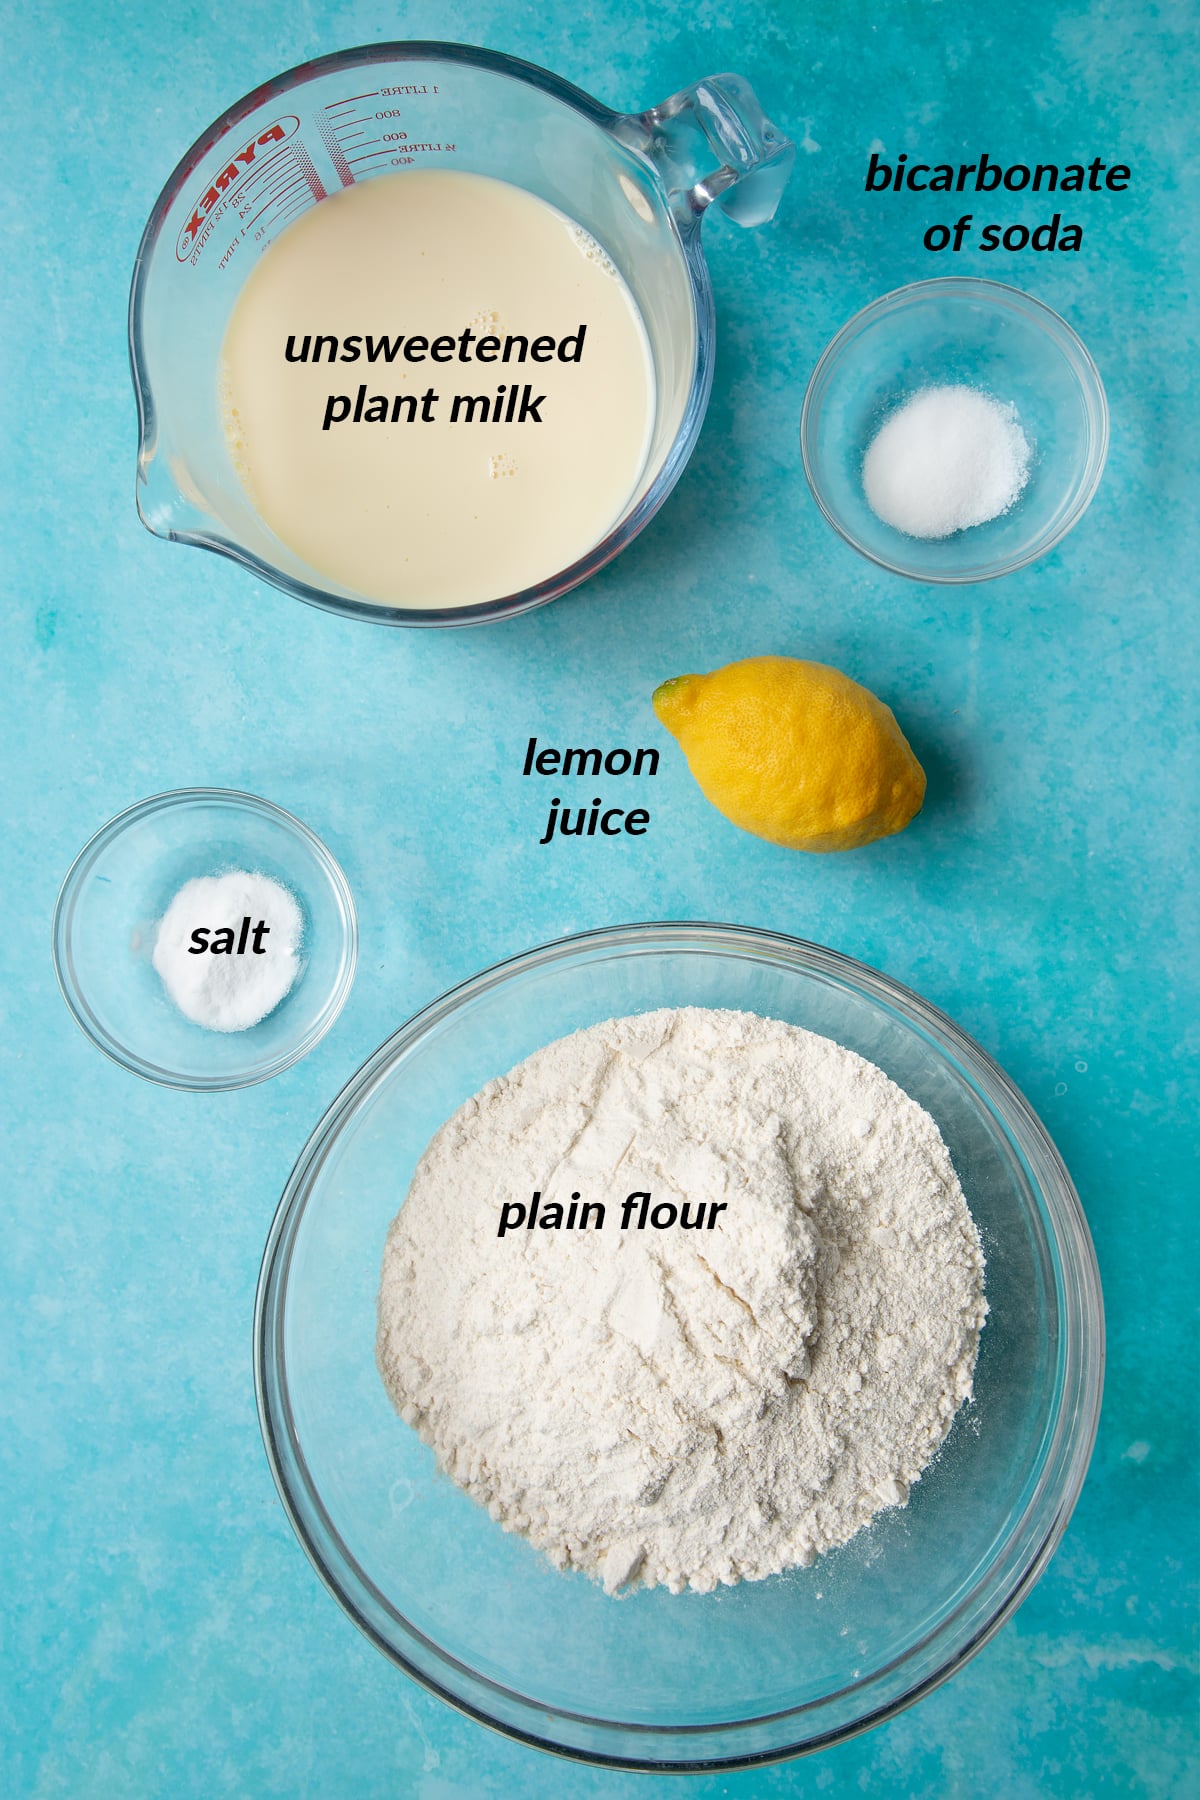 The ingredients to make vegan soda bread: plant milk, bicarbonate of soda, lemon juice, salt and plain flour.